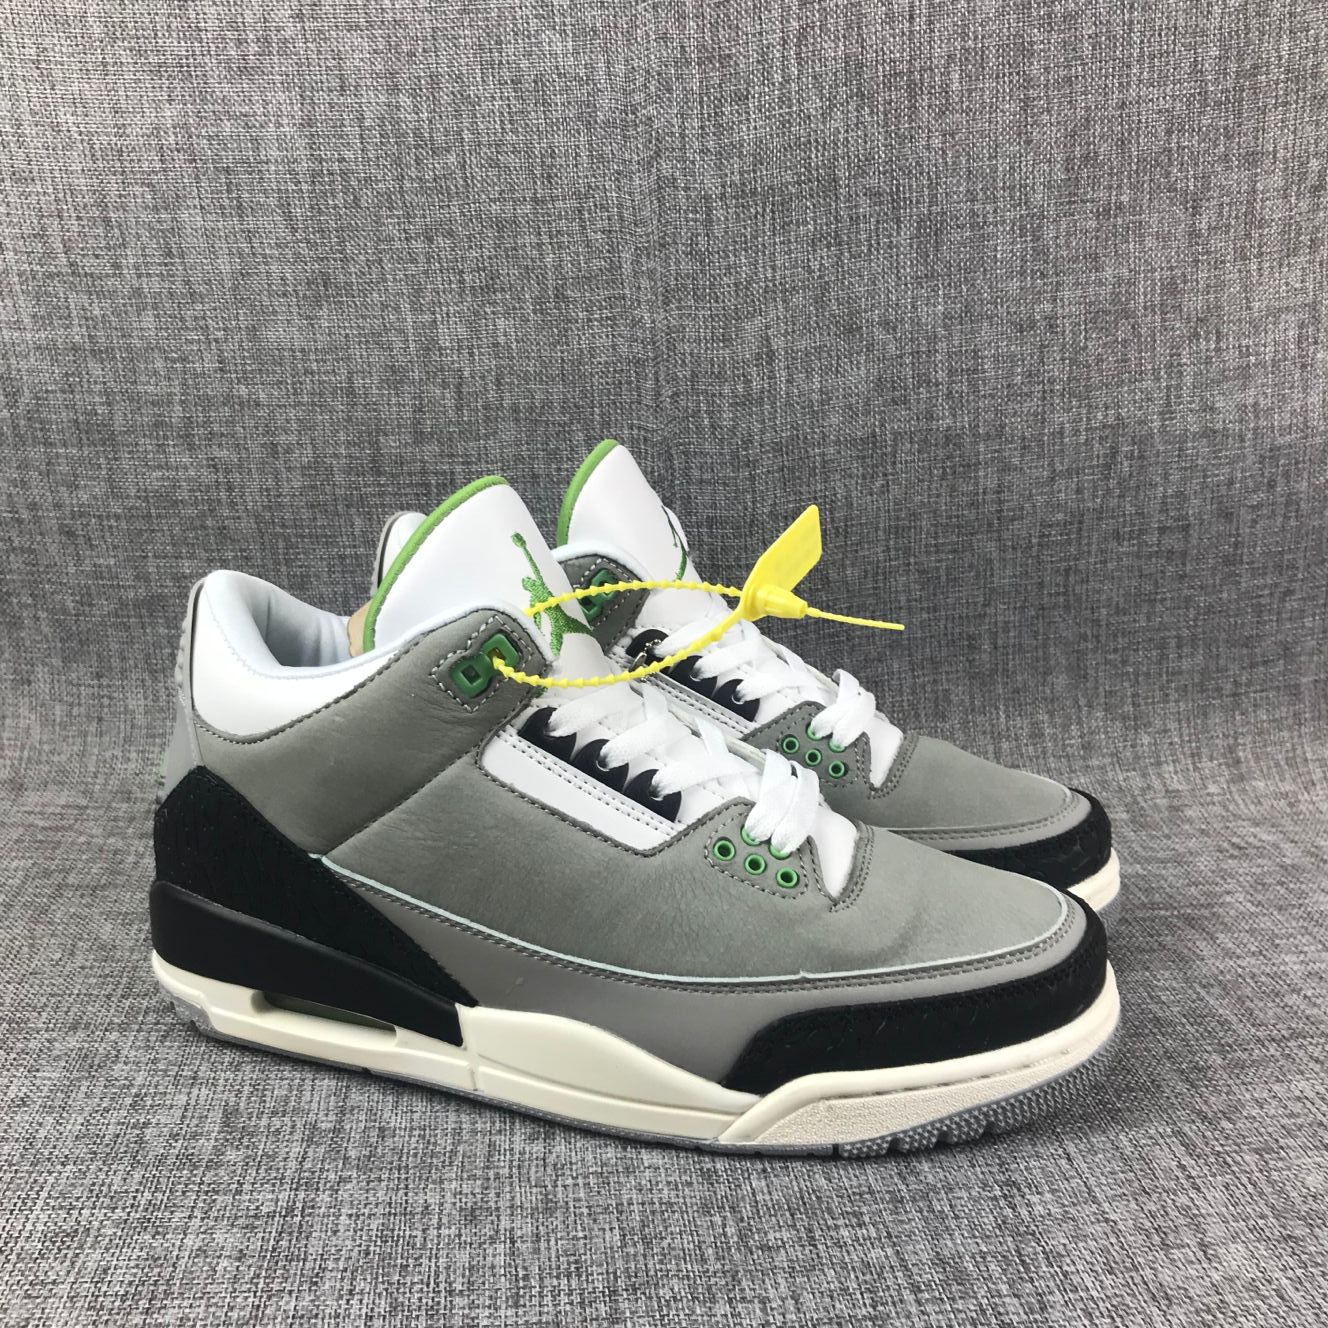 Air Jordan 3 Chlorophyll Green Black White Shoes